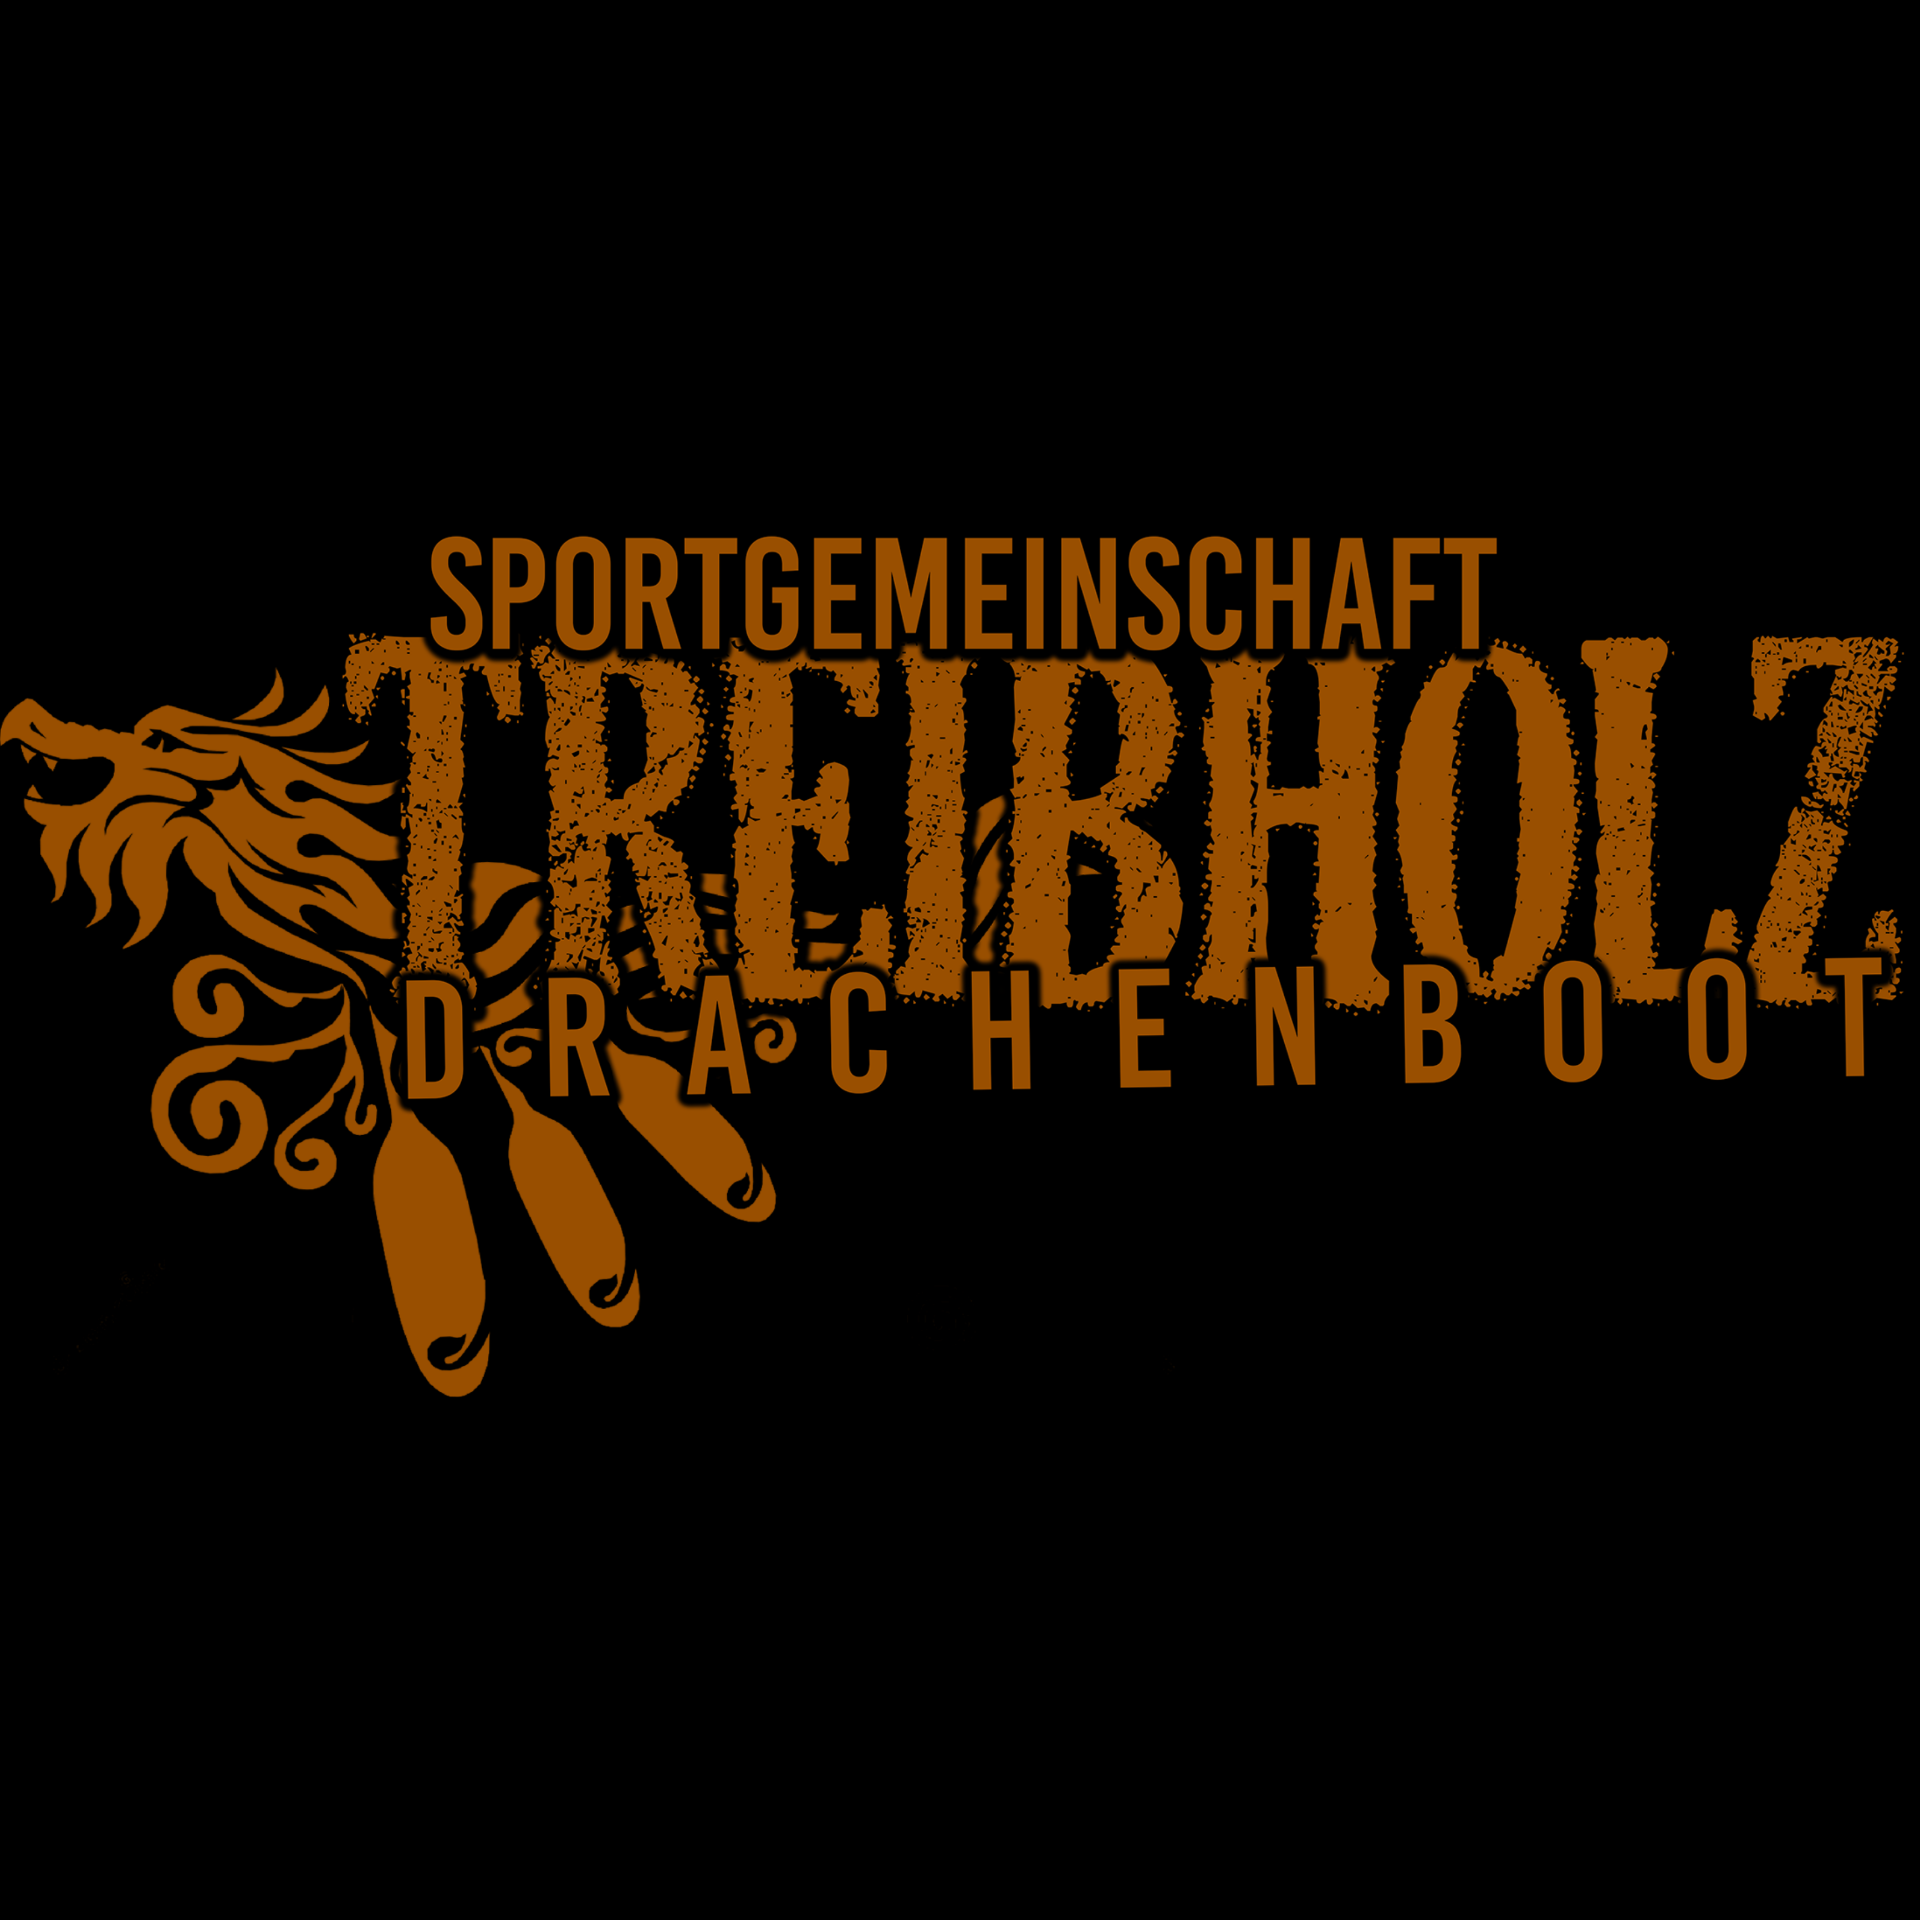 Team Treibholz